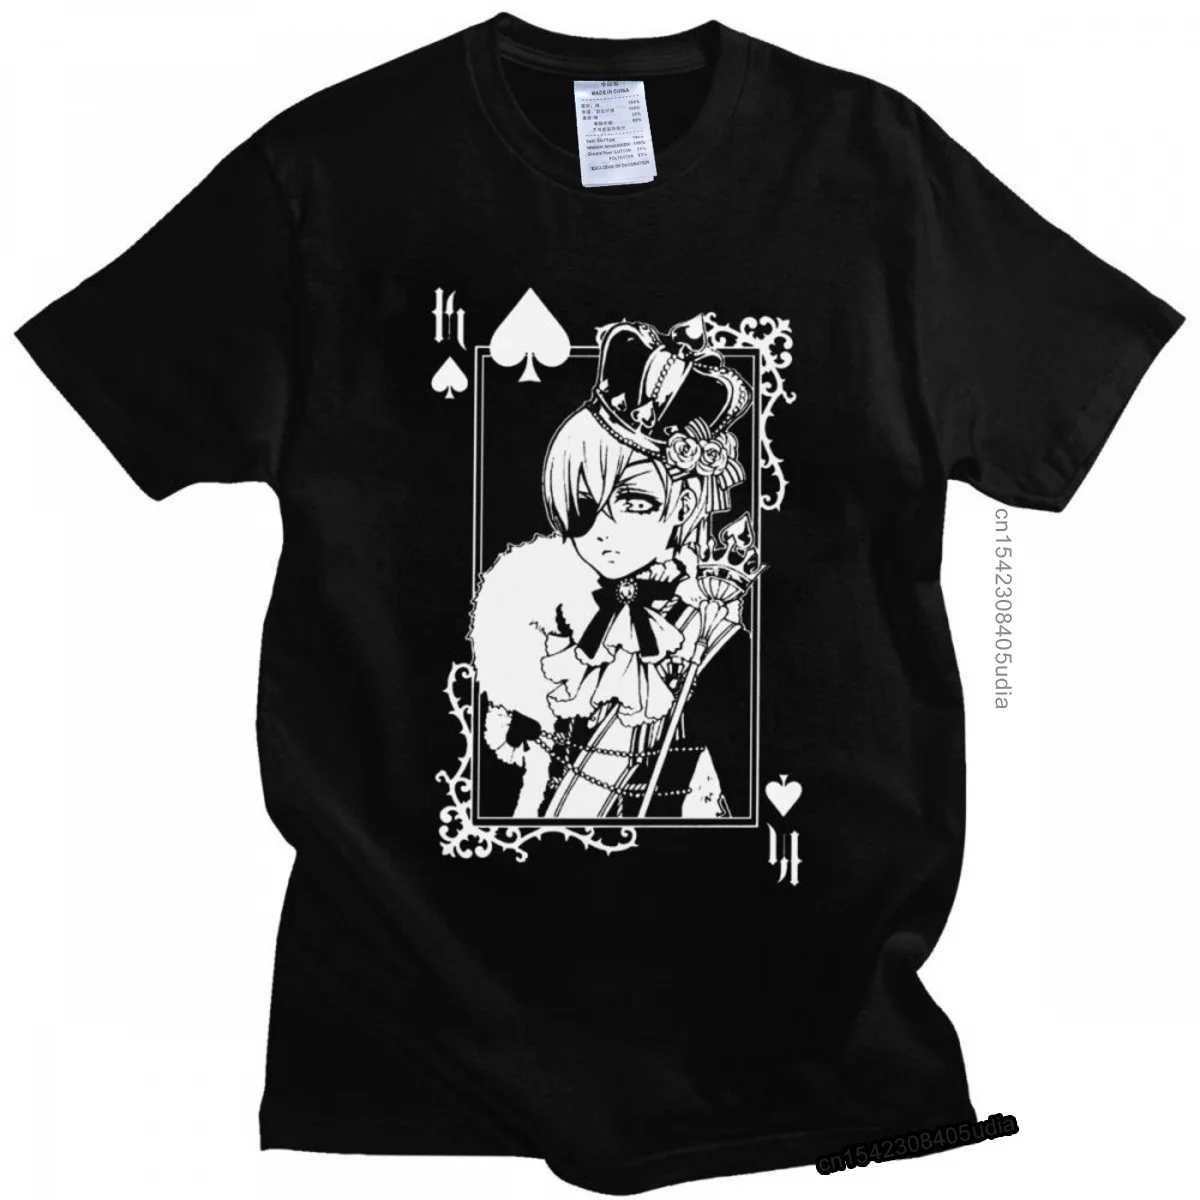 Black Butler Ciel Phantomhive T-Shirt Homme Cotton Japan Anime Manga Kuroshitsuji Tee Shirt for Men Novelty Tshirt